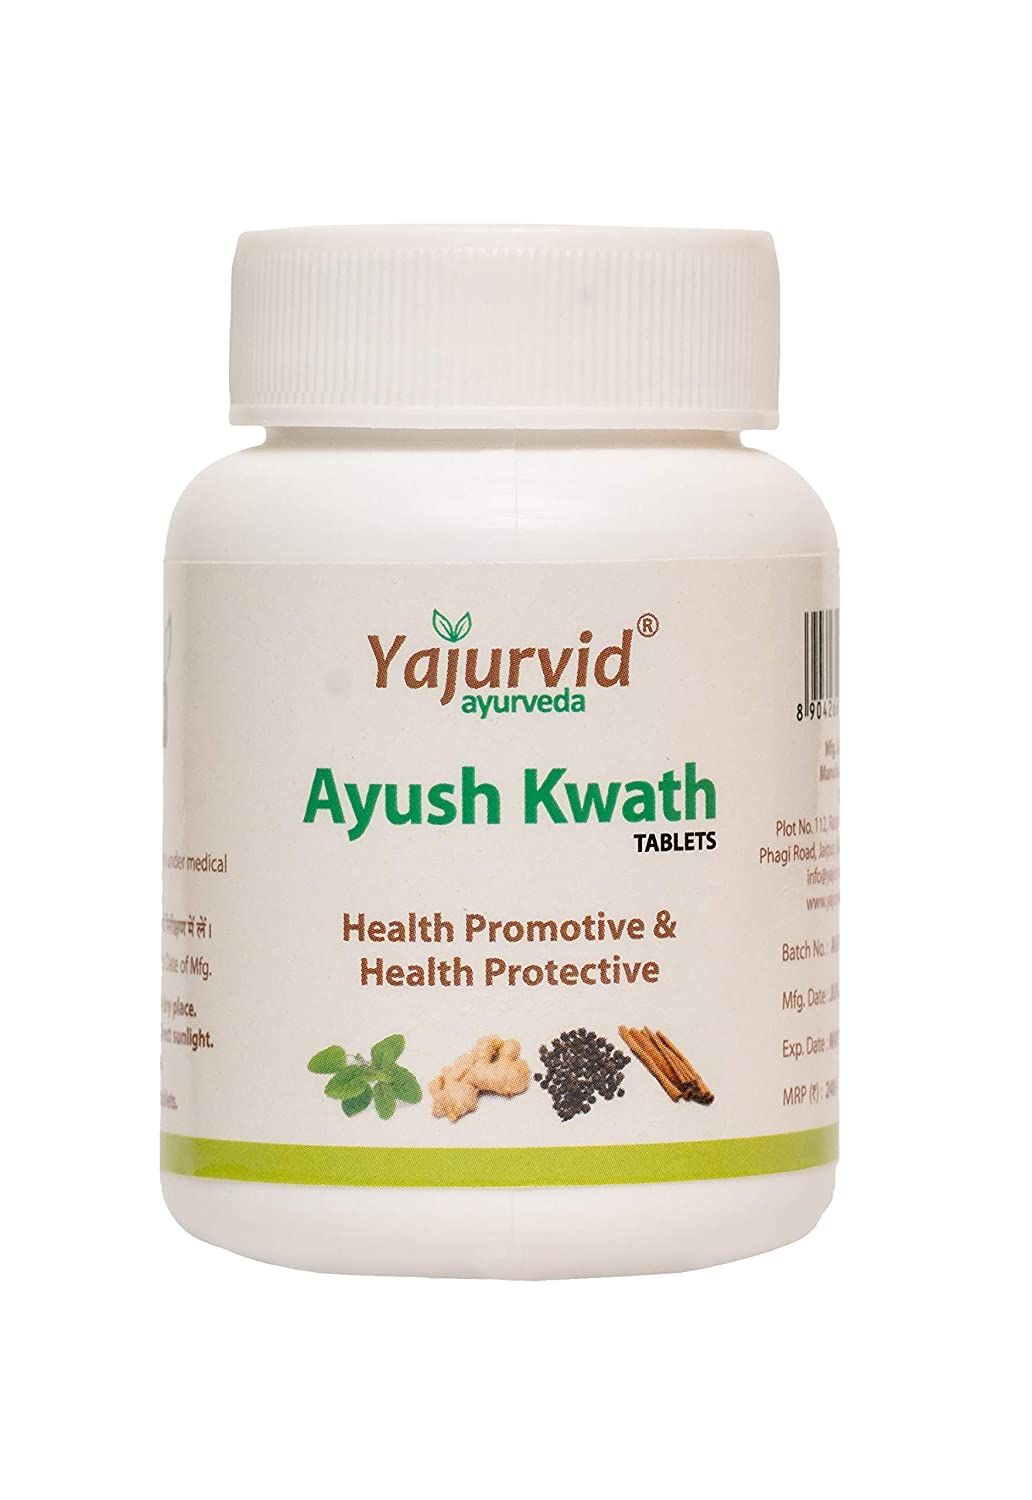 Yajurvid Ayurveda Ayush Kwath Image